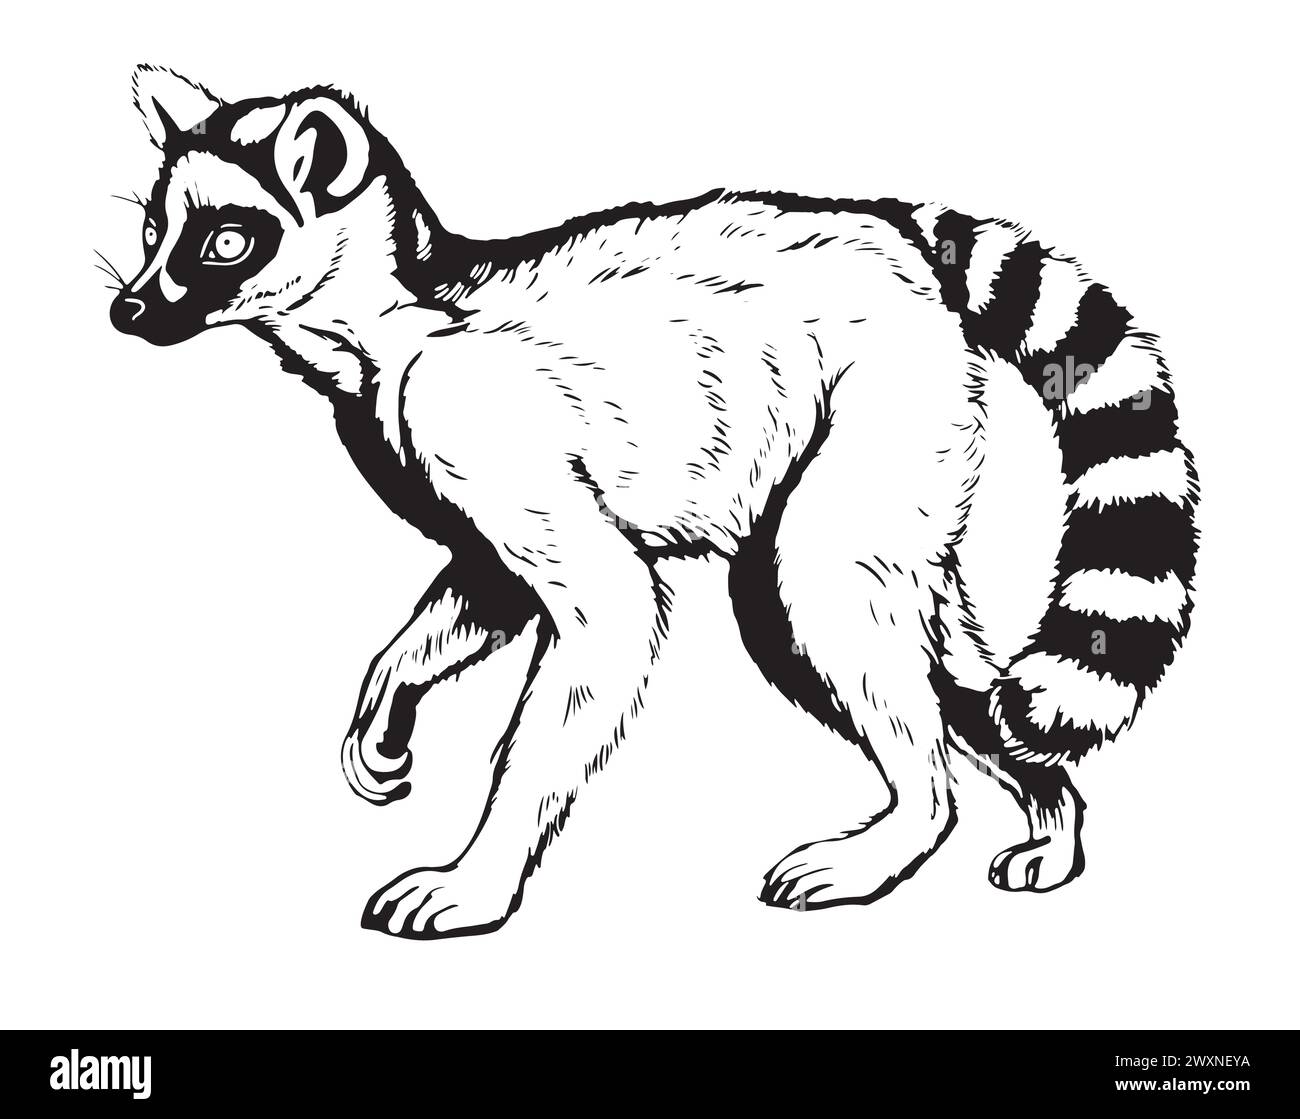 Zoo. African fauna. Lemur, Madagascar. Hand drawn illustration for tattoo design, emblem, badge, t-shirt print. Engraving of wild animal. Classic vint Stock Vector